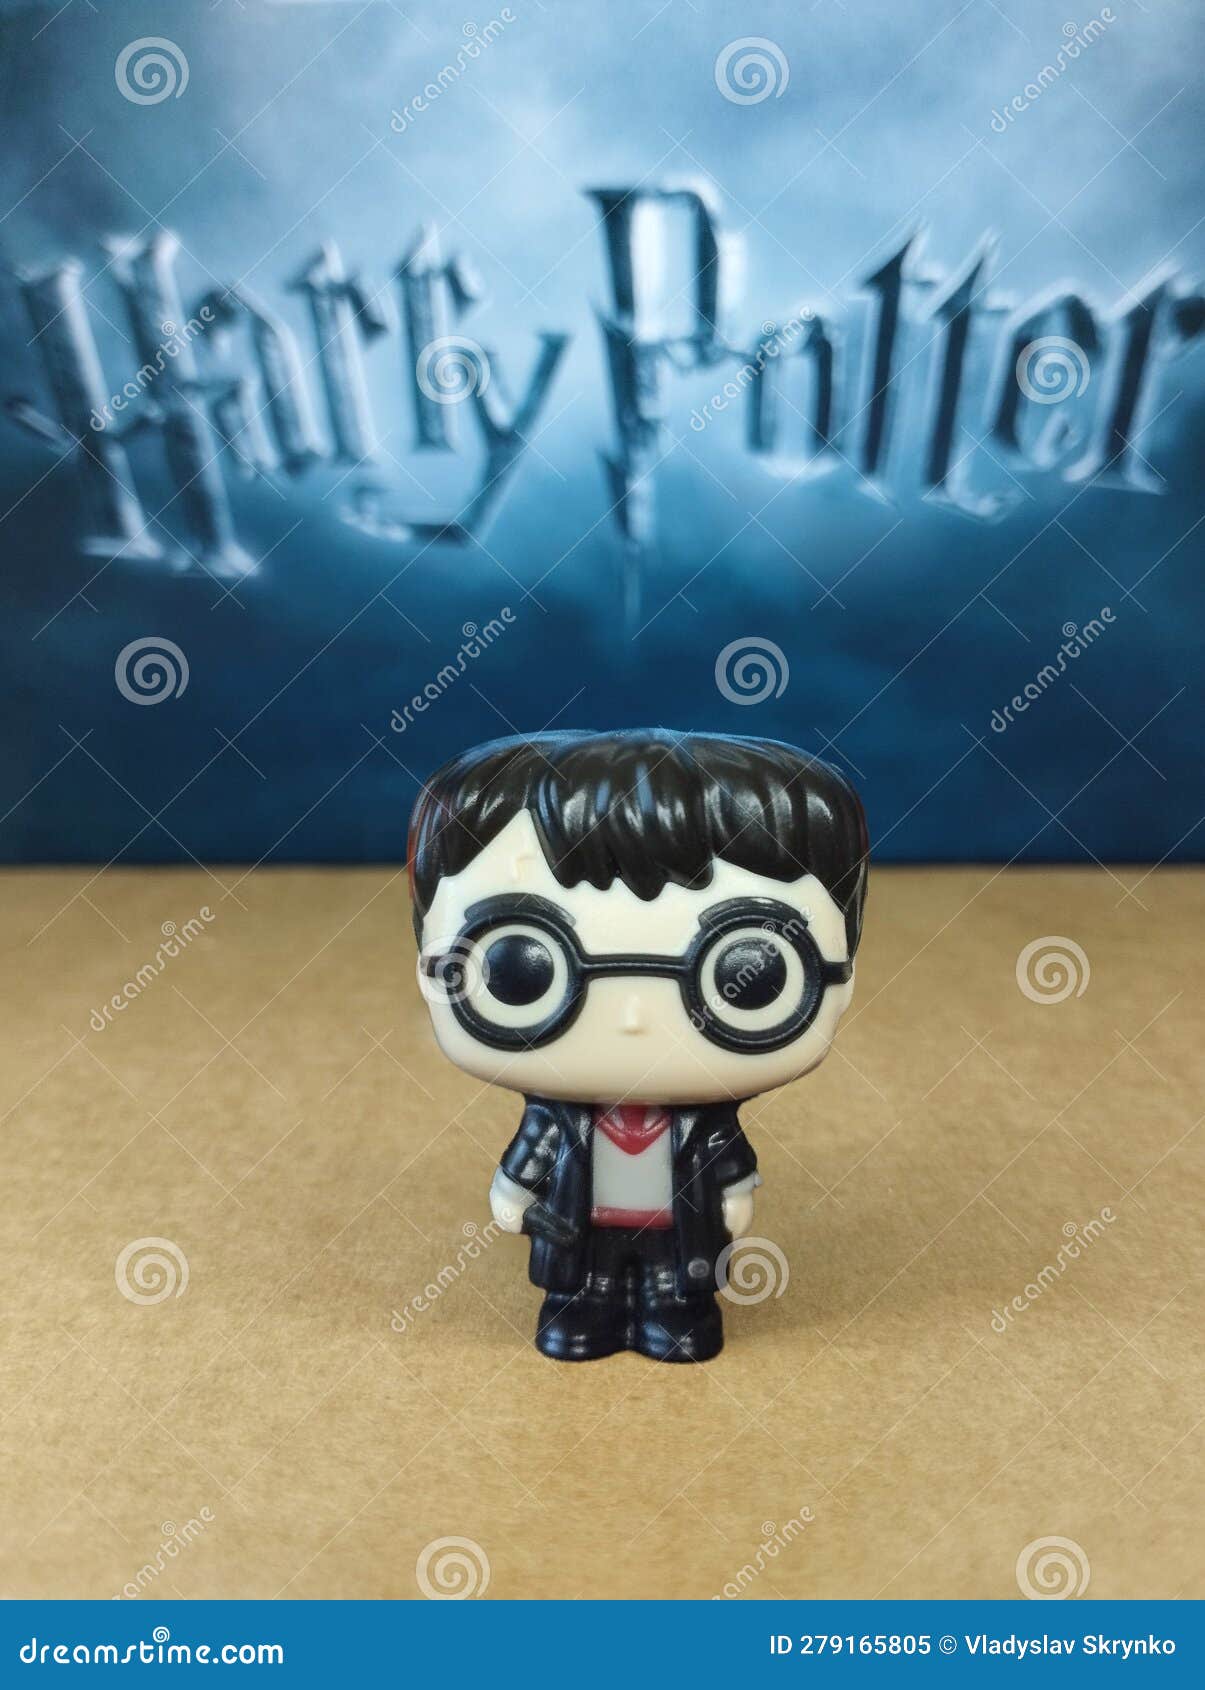 Harry Potter Figure Kinder Joy from the Harry Potter Series